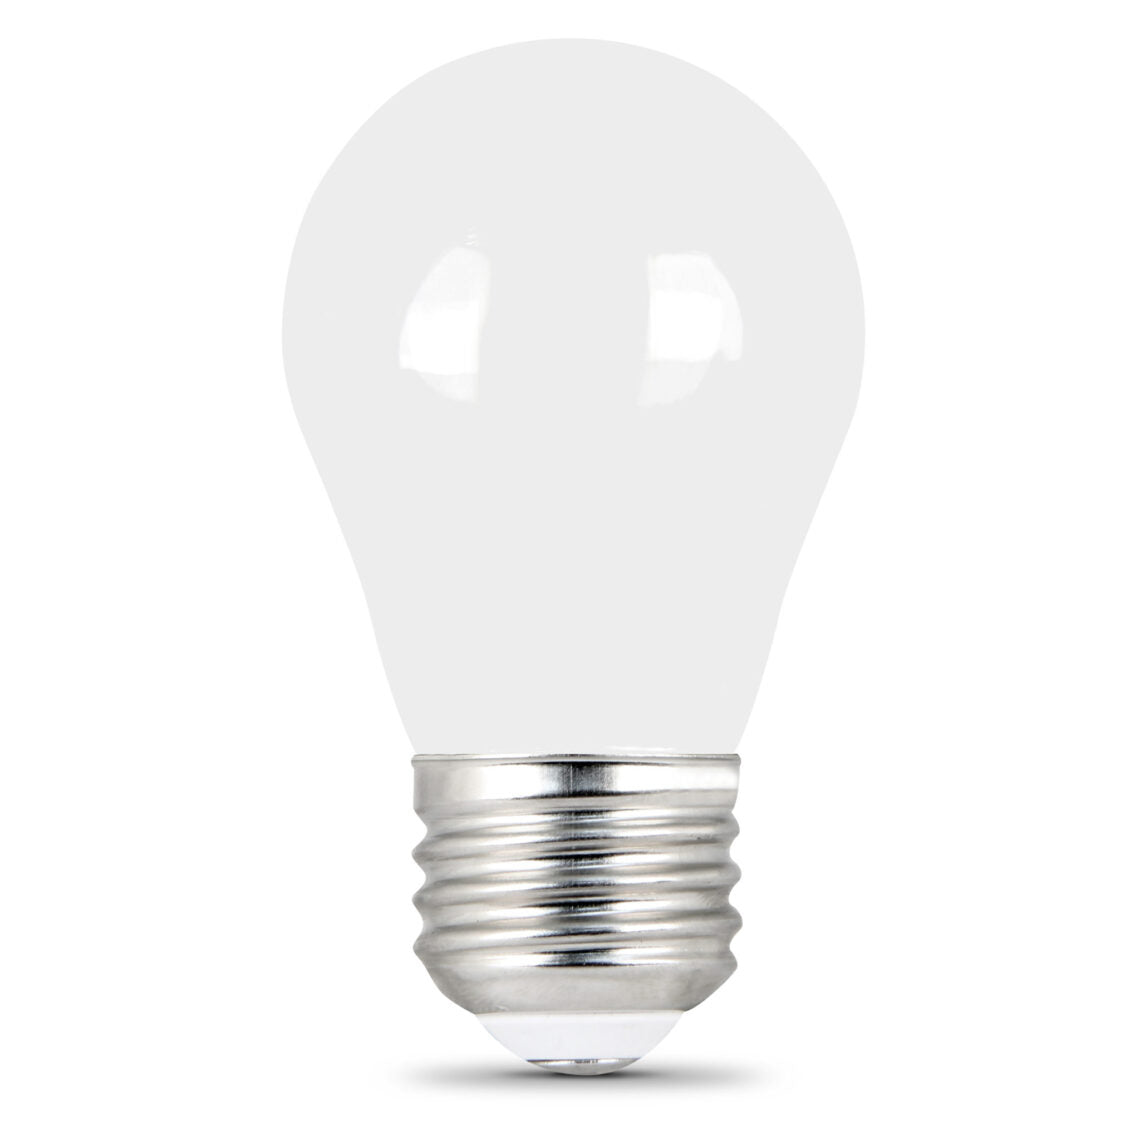 Votatec G15 Filament Frosted LED Bulb,E26 4W 400Lm, Single Colour 3000K